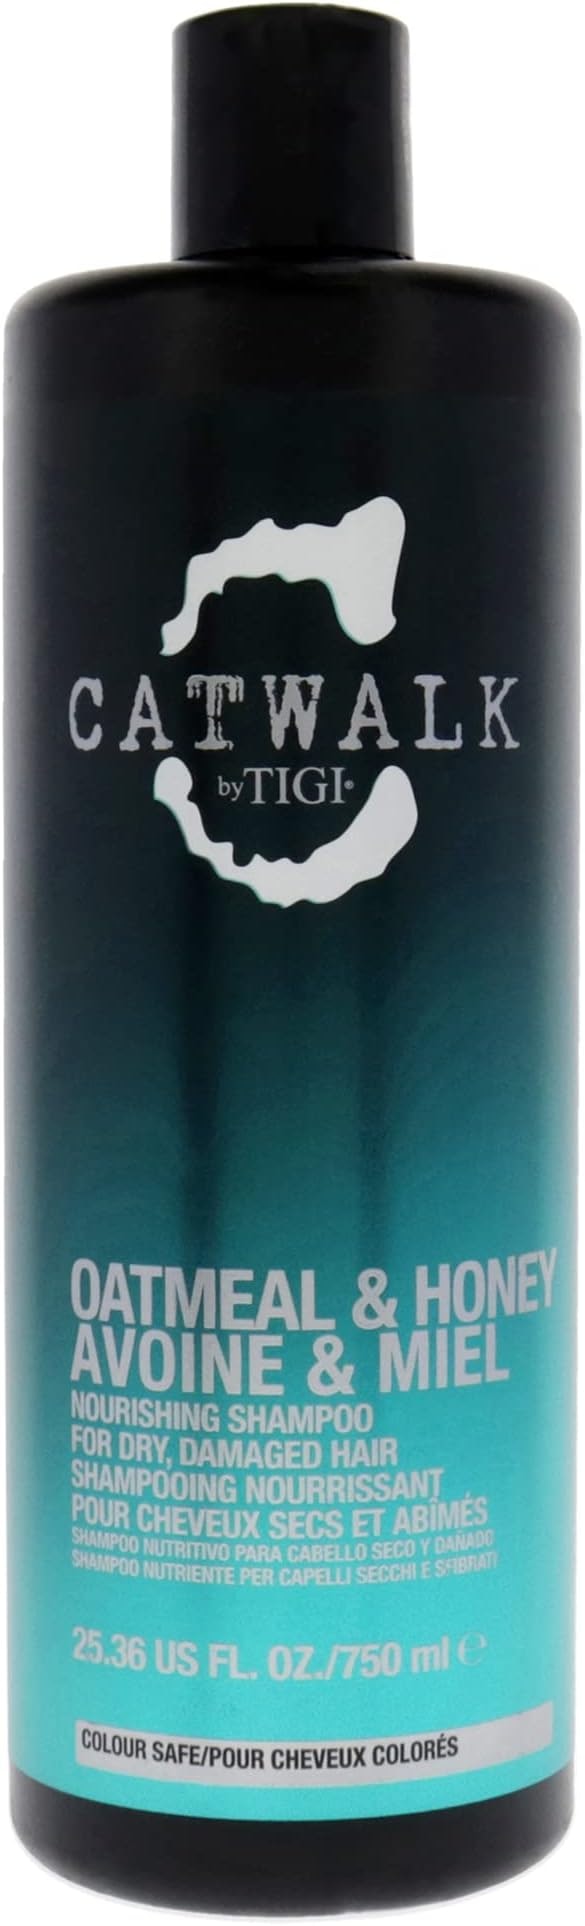 TIGI Catwalk Oatmeal & Honey Shampoo 750ml